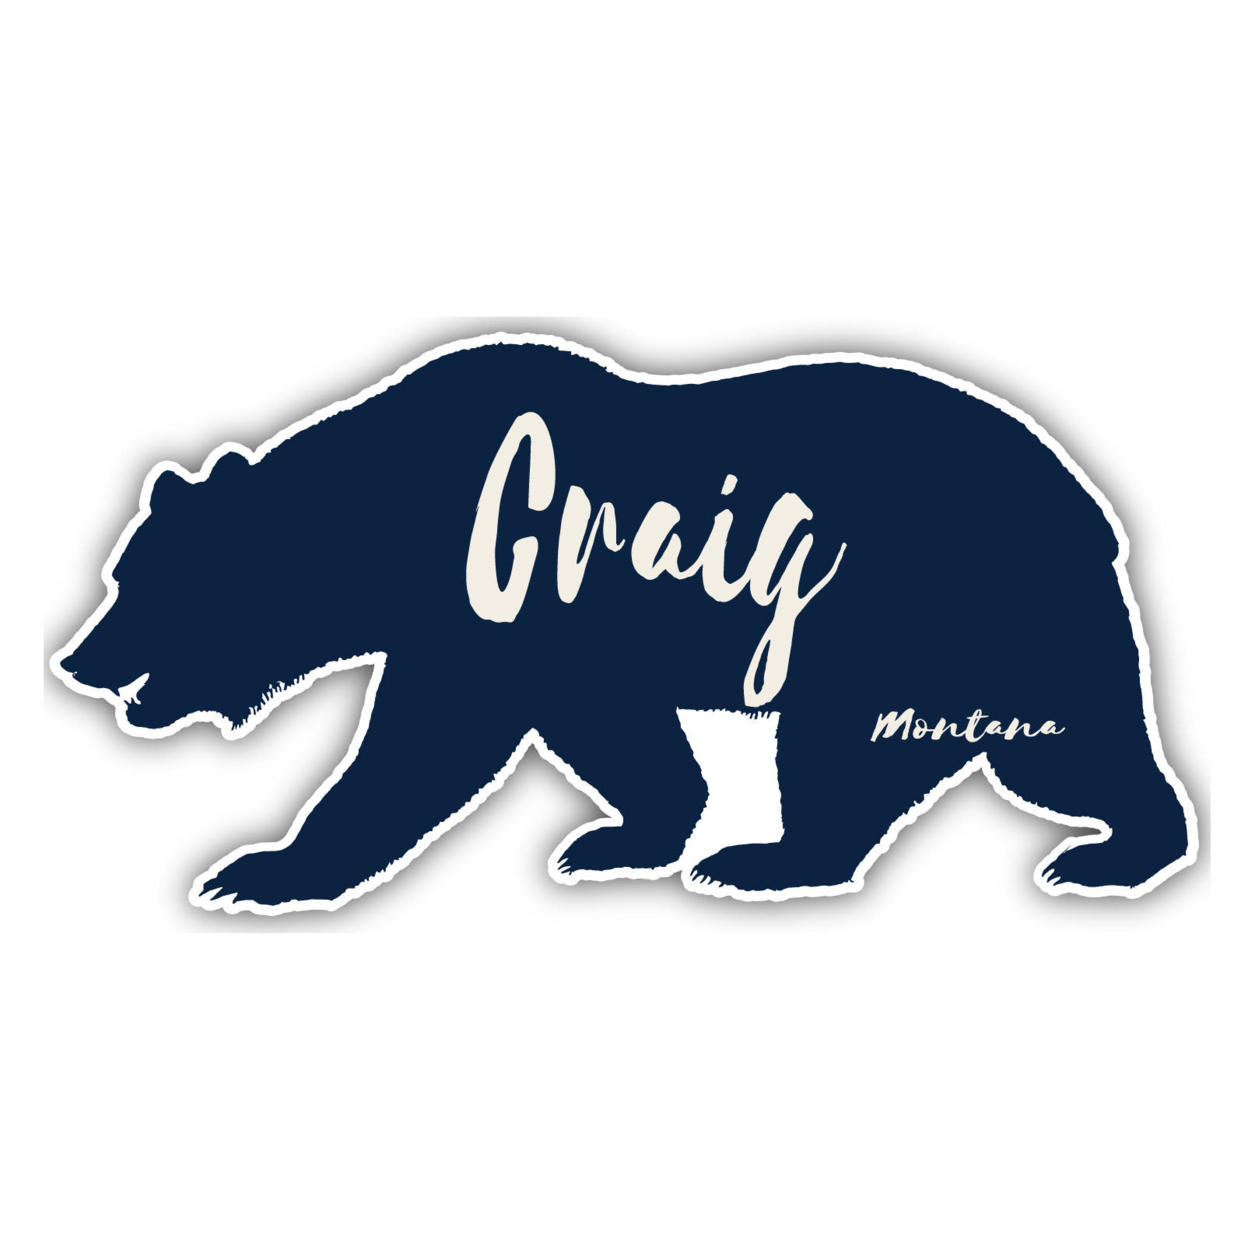 Craig Montana Souvenir Decorative Stickers (Choose Theme And Size) - Single Unit, 4-Inch, Bear